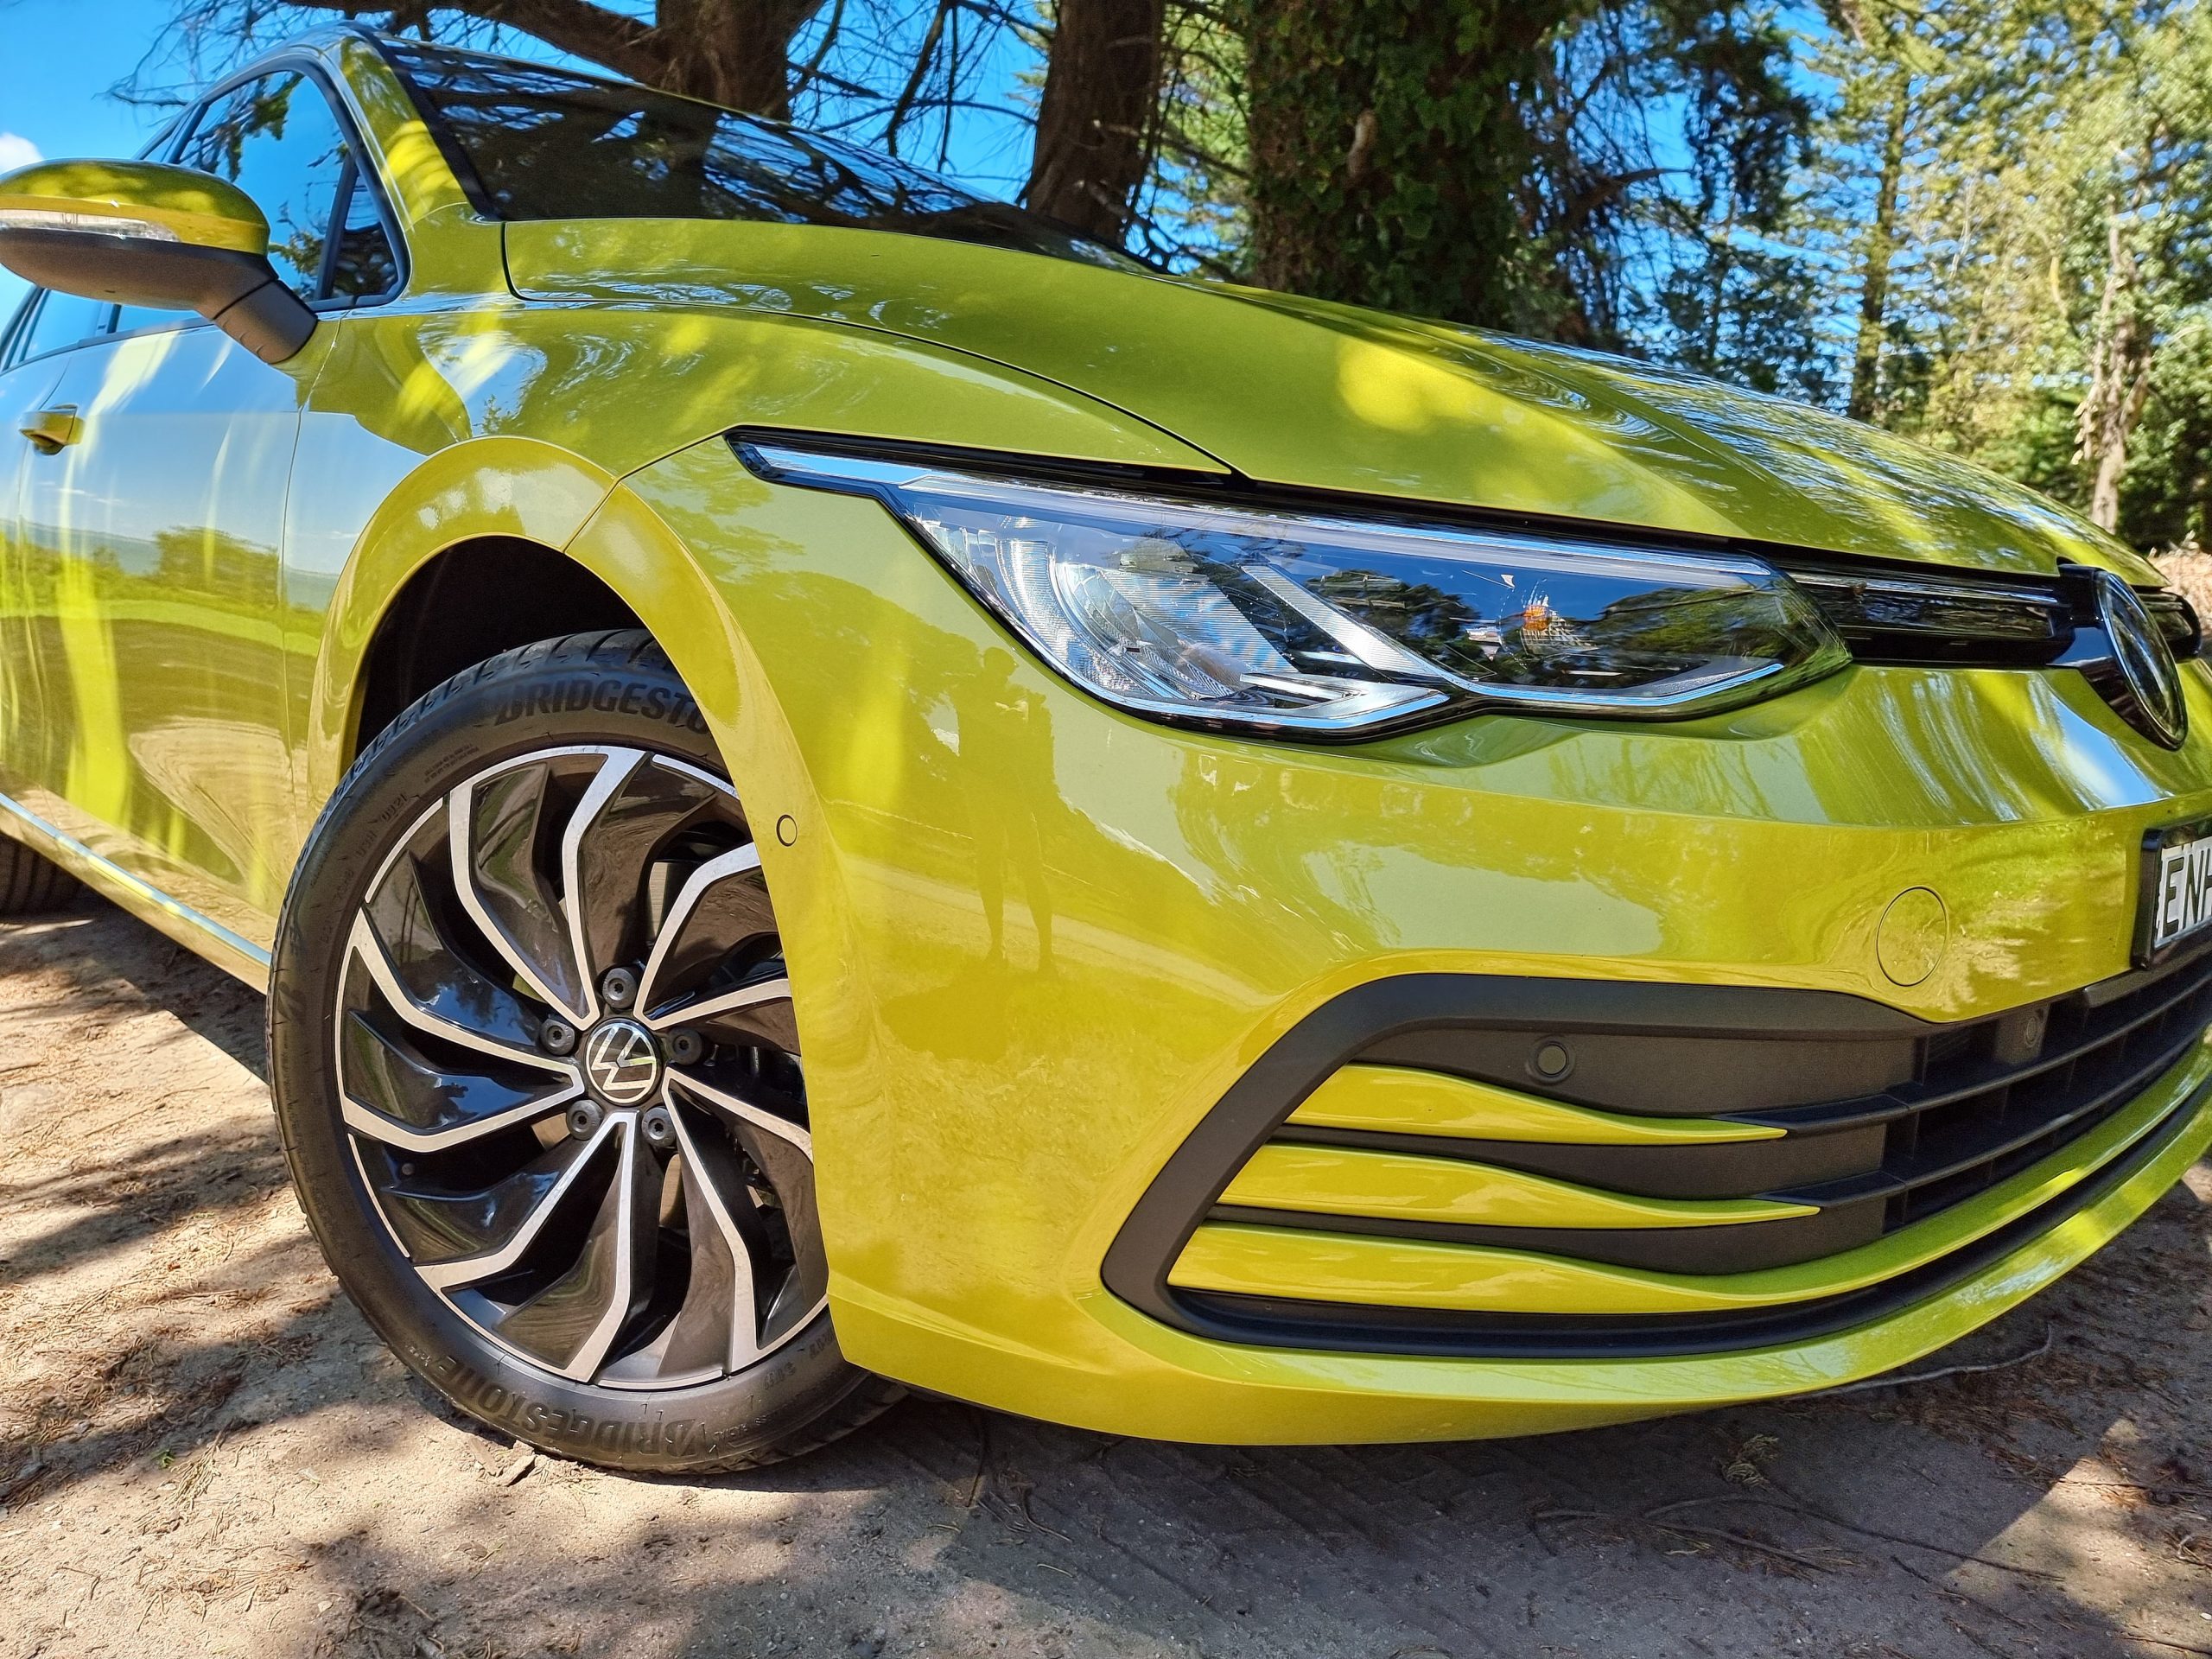 2022 VW Golf Wagon yellow front